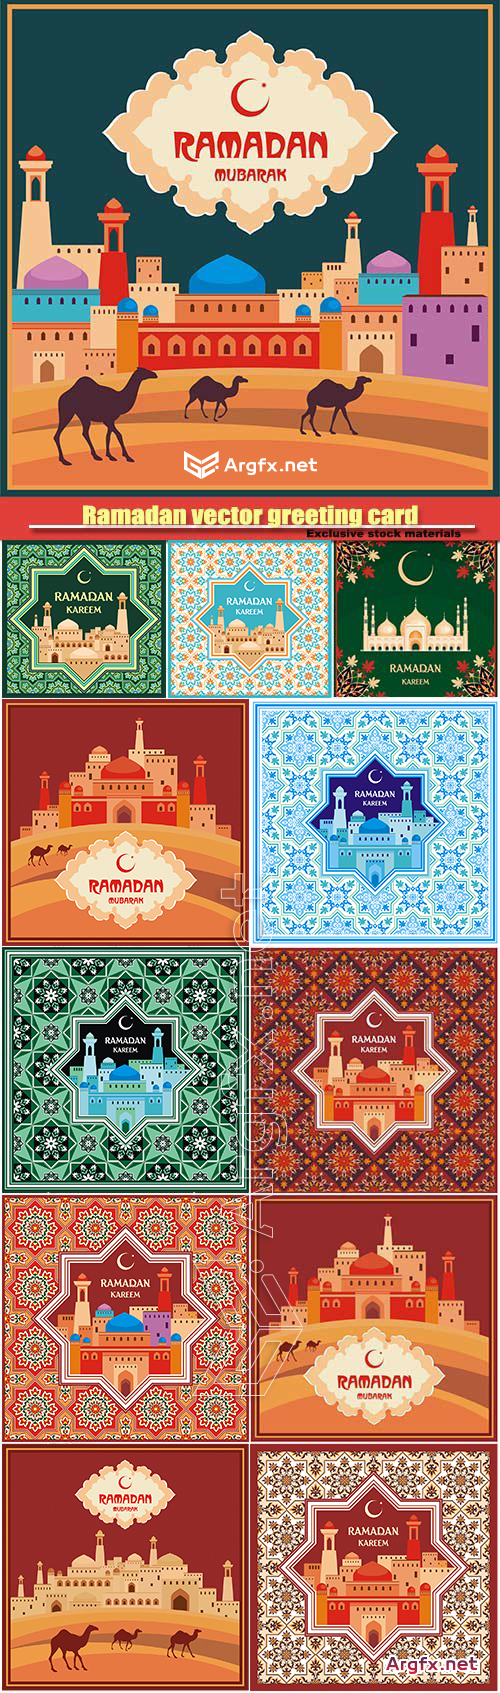 Ramadan vector greeting card